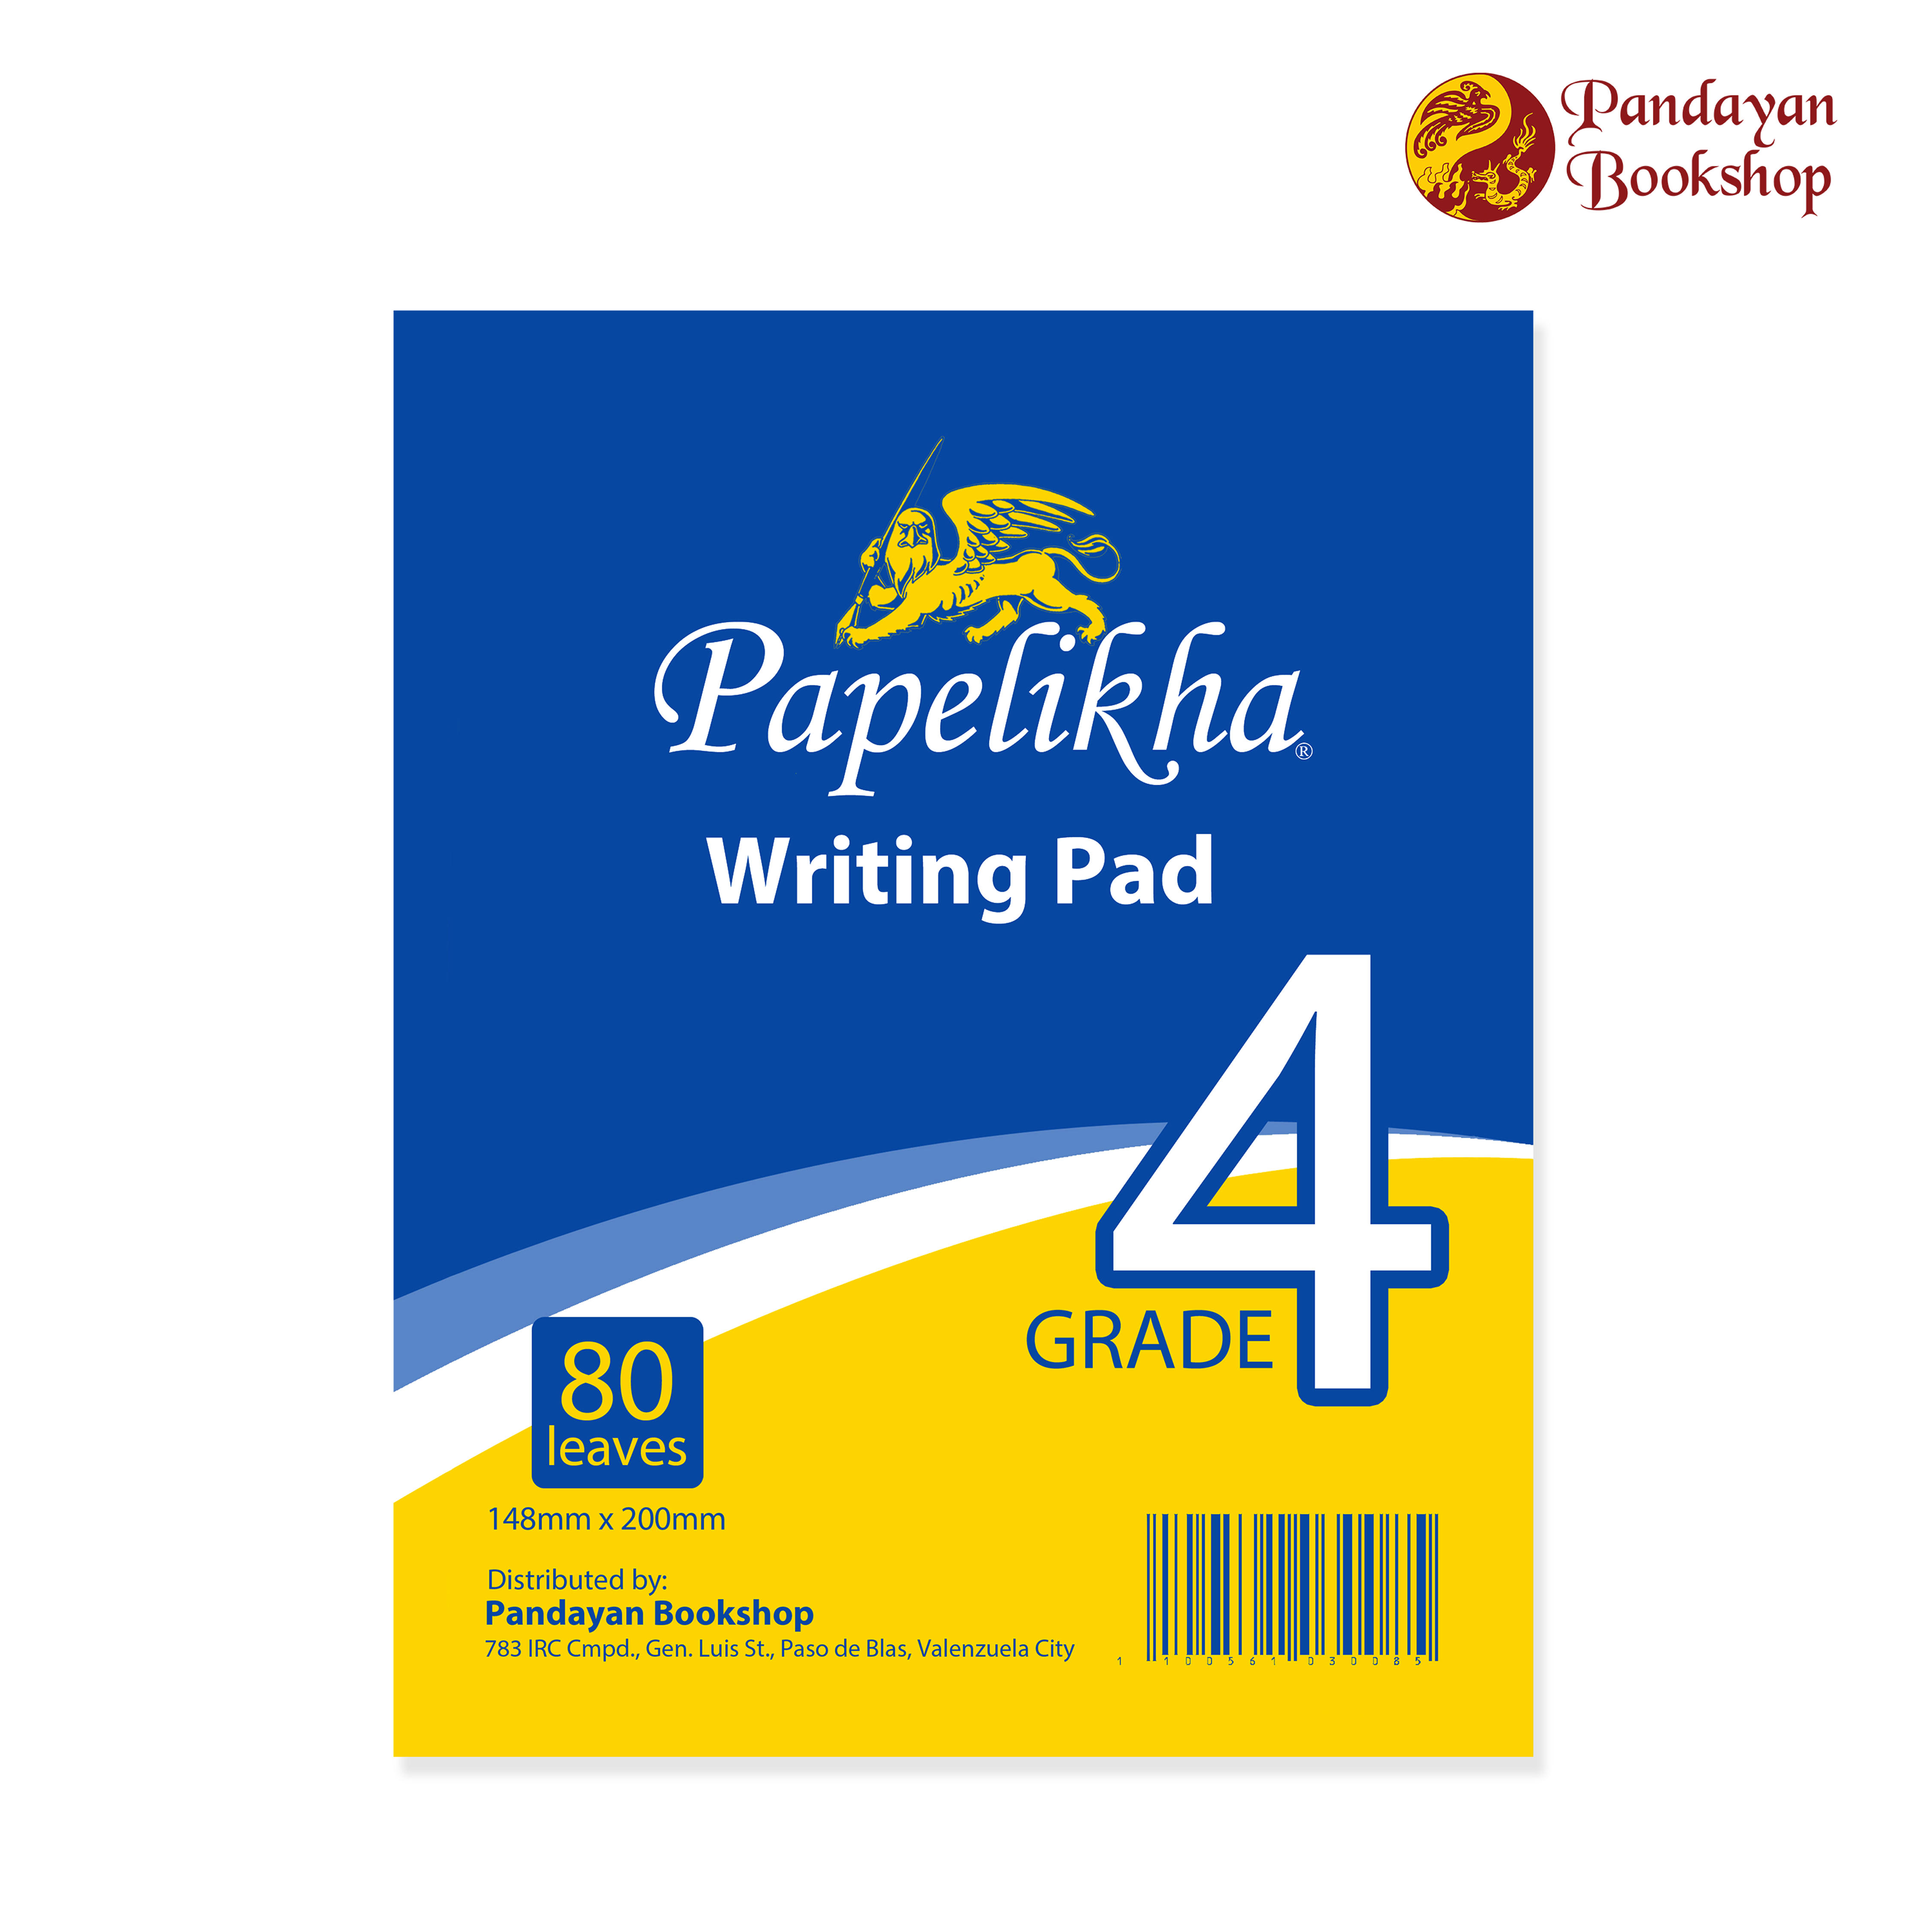 Papelikha Grade 4 Writing Pad 3s 80 leaves